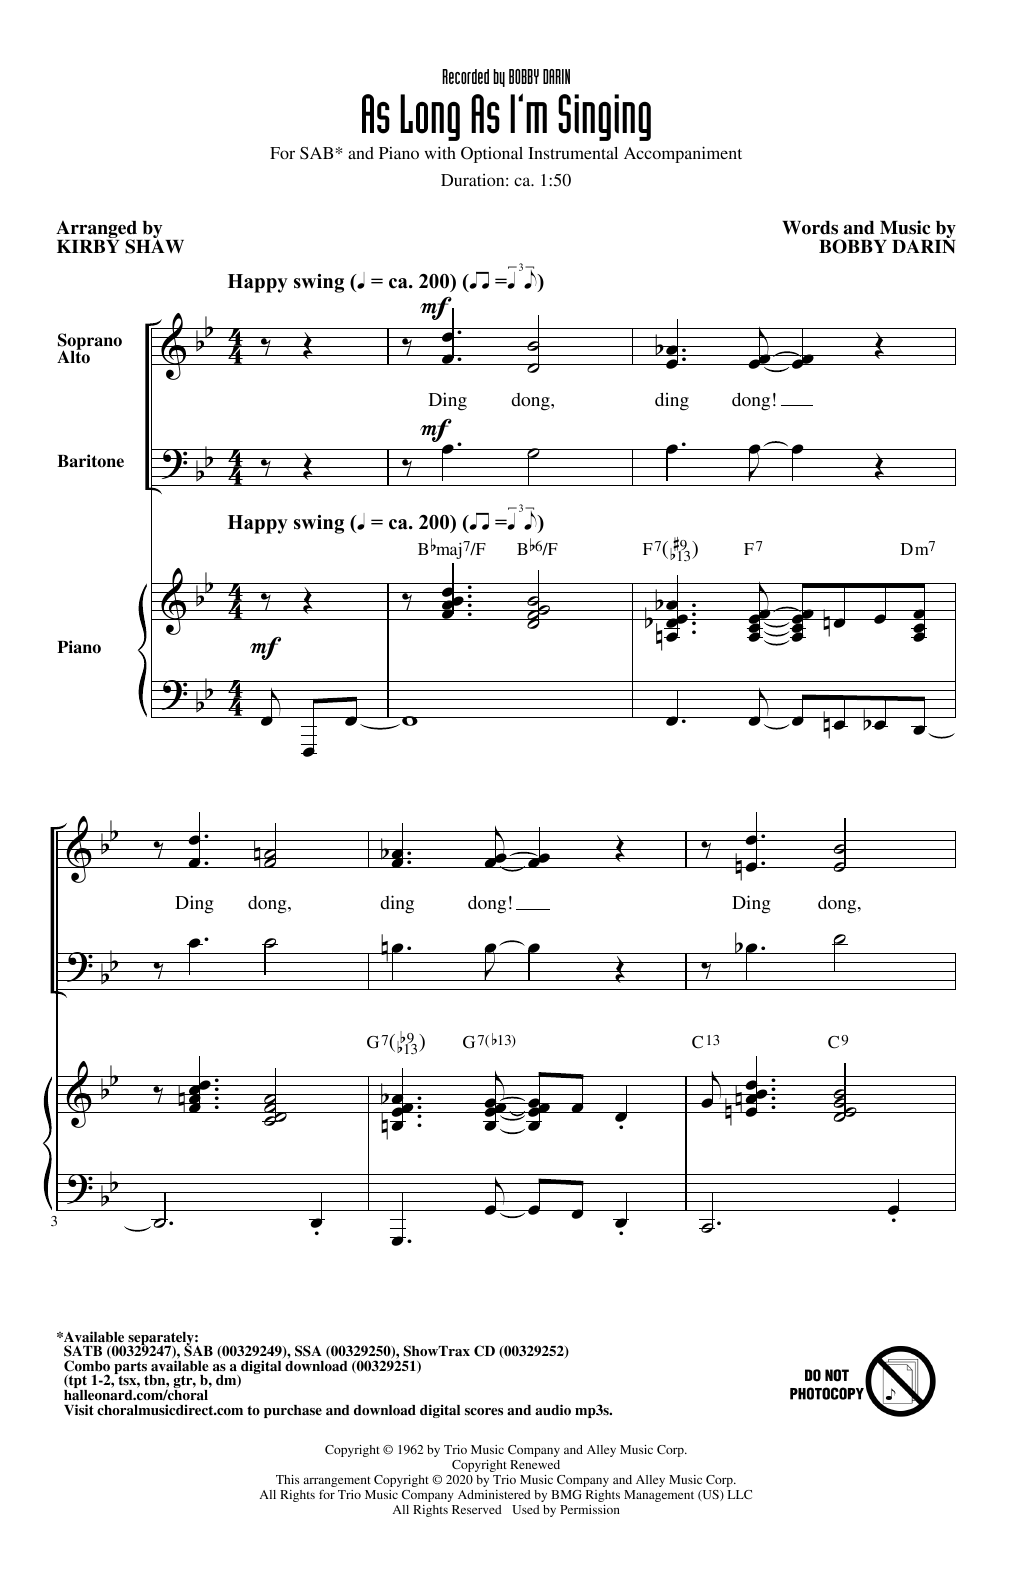 Bobby Darin As Long As I'm Singing (arr. Kirby Shaw) Sheet Music Notes & Chords for SATB Choir - Download or Print PDF